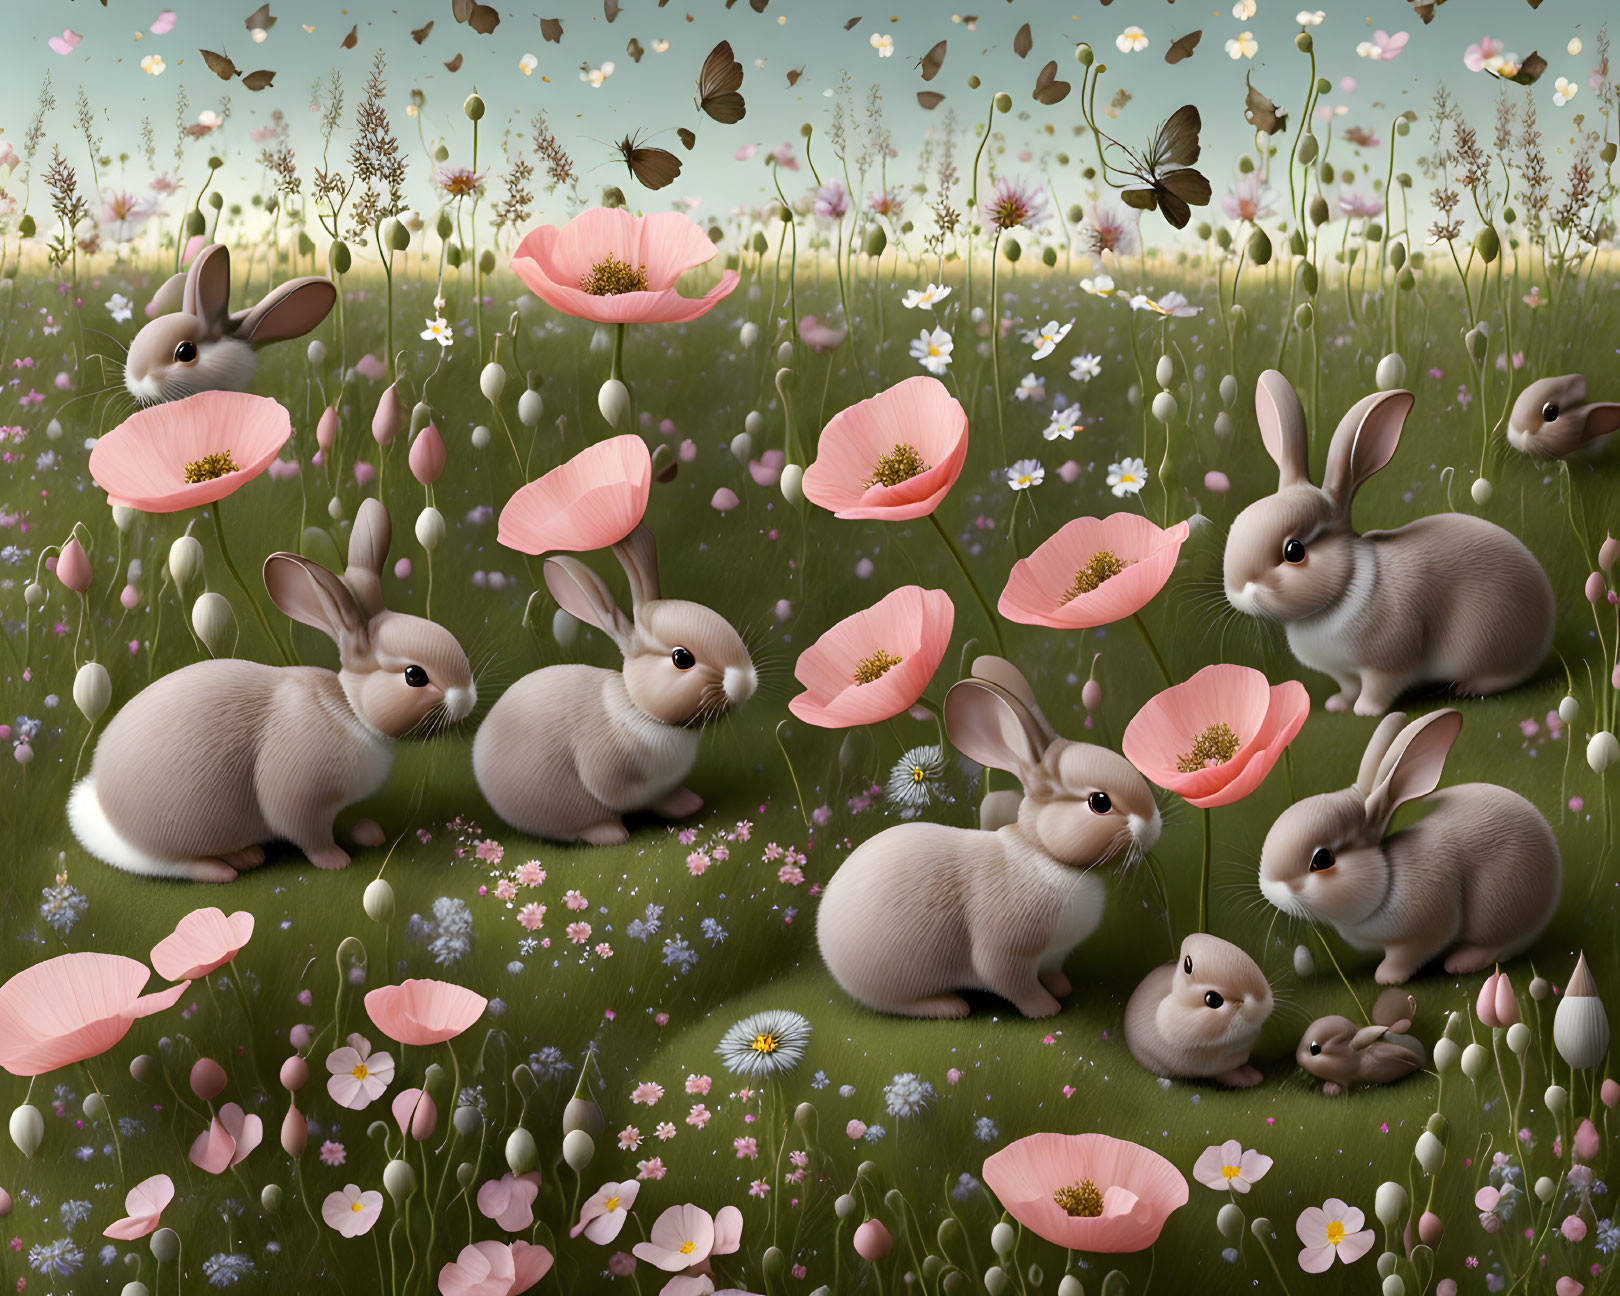 Multiple rabbits in blooming flower field with fluttering butterflies